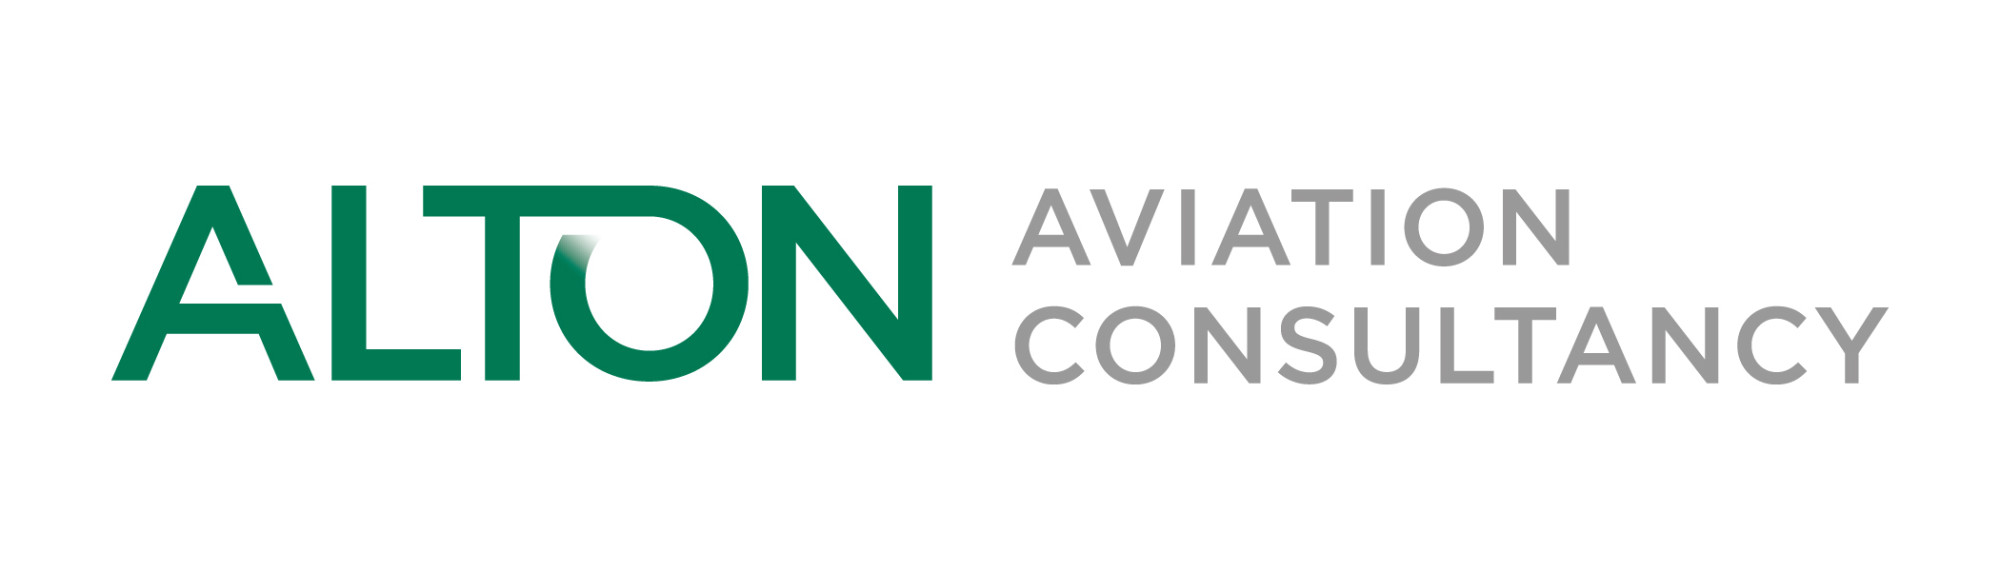 Alton Aviation Consultancy.jpg